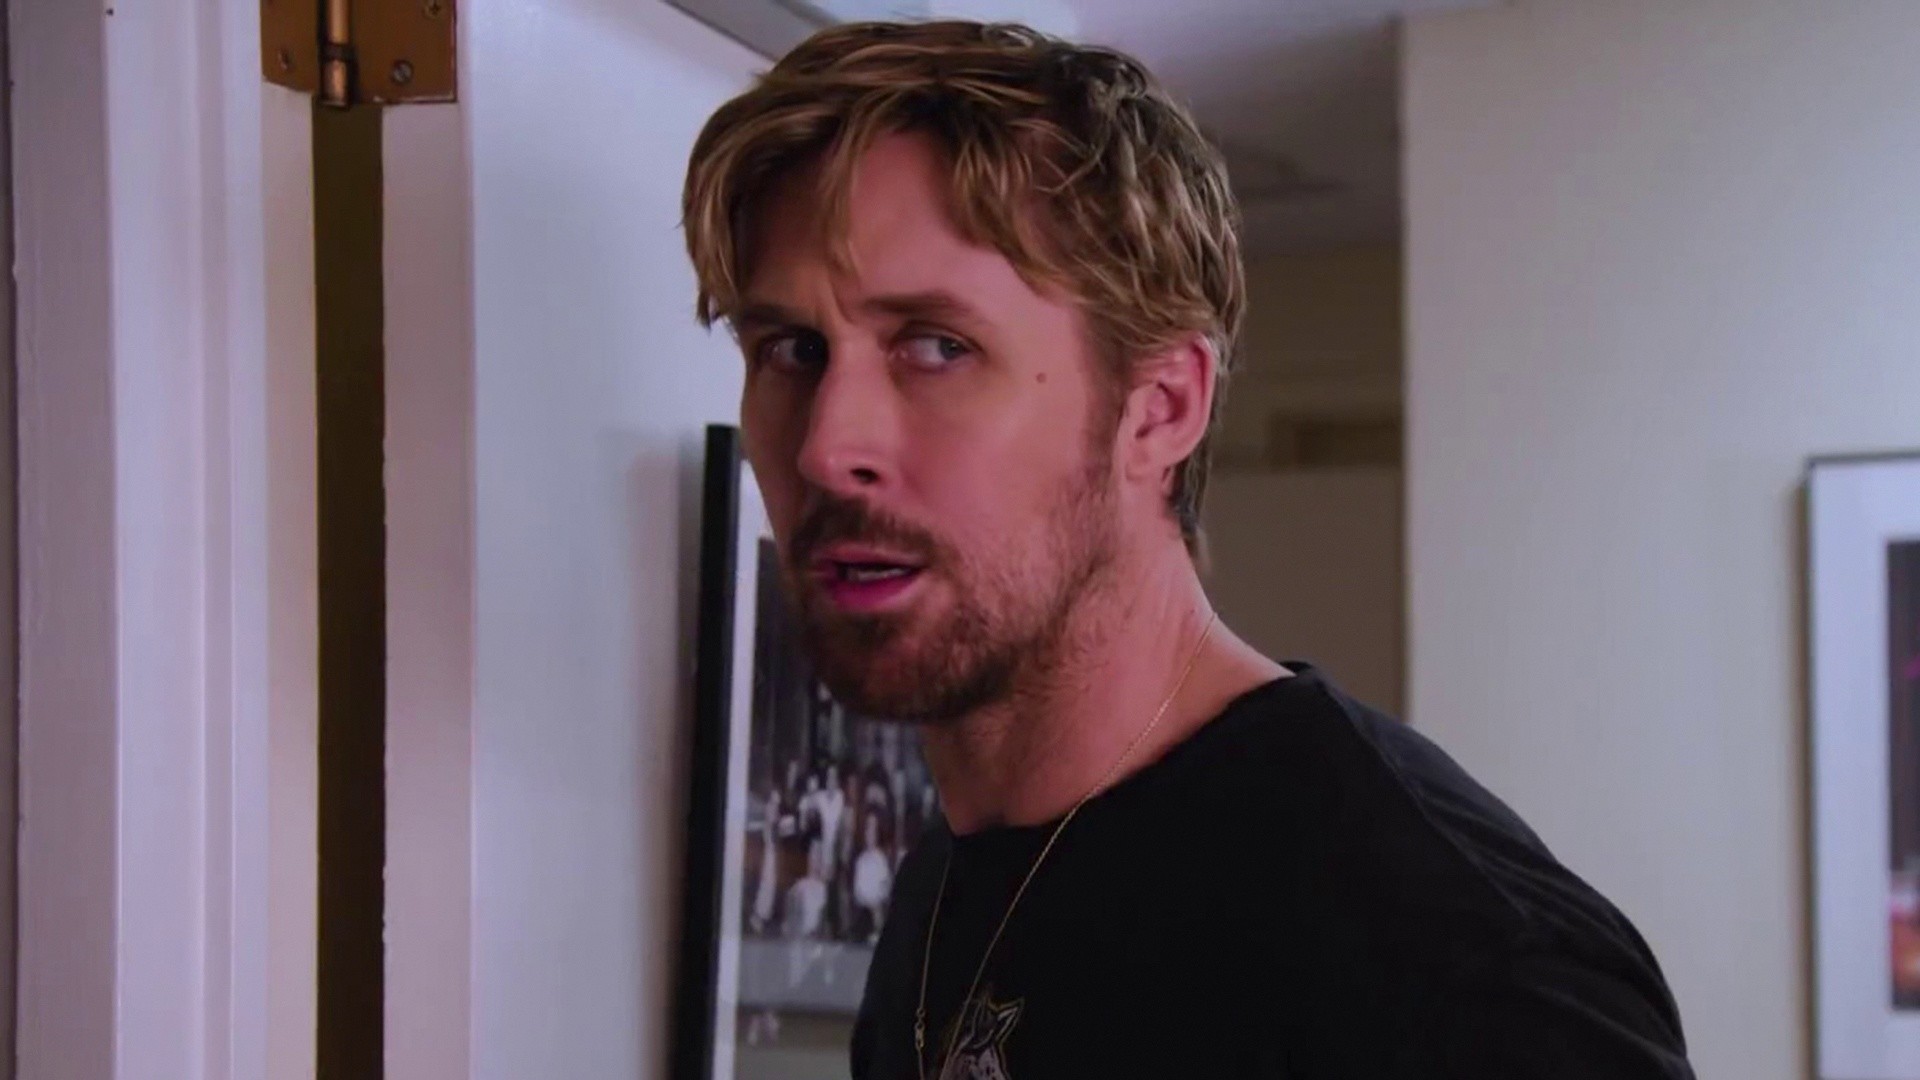 Watch Ryan Gosling fangirl over Chris Stapleton in 'SNL' preview